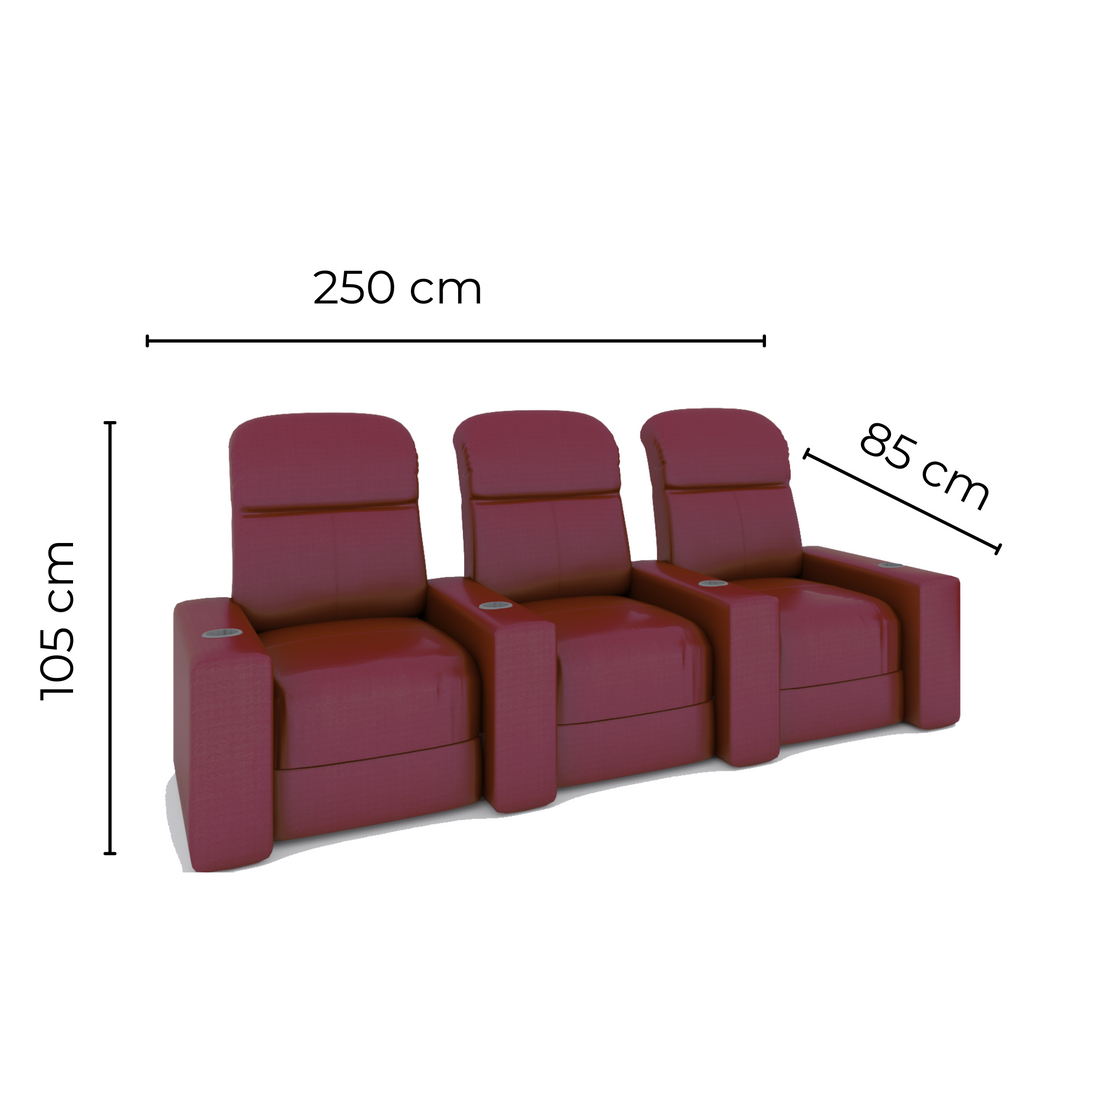 Cinema 3 seater Recliner Sofa